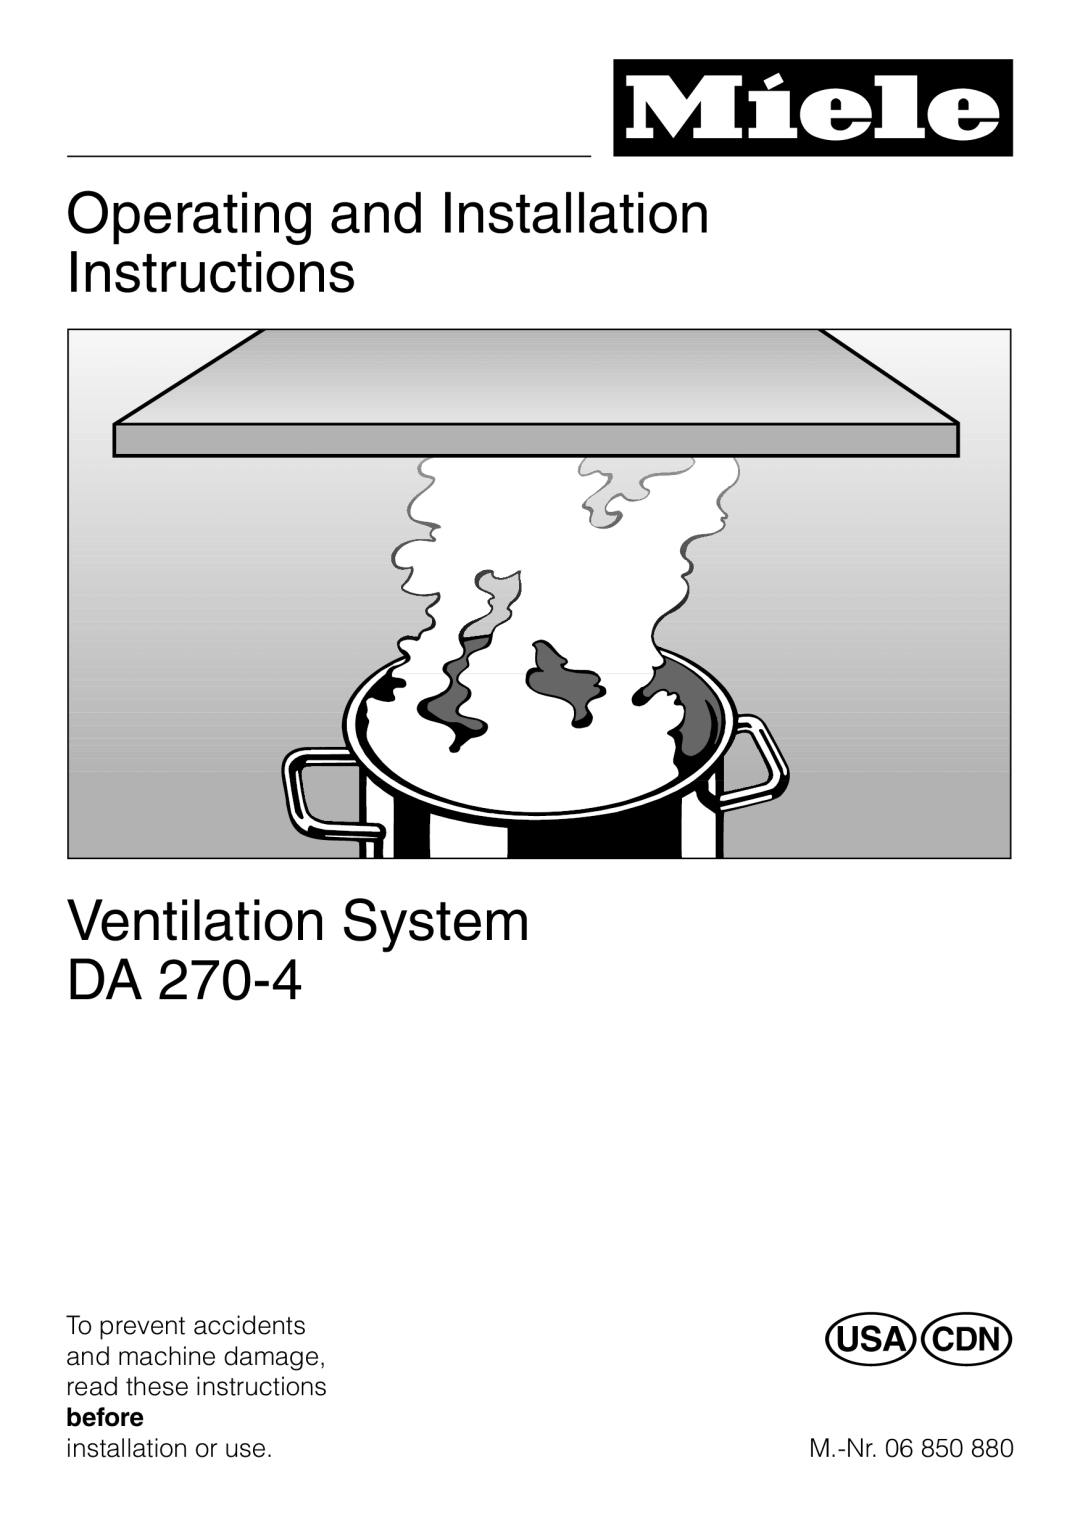 Miele DA 270-4 installation instructions Operating and Installation Instructions, Ventilation System DA 